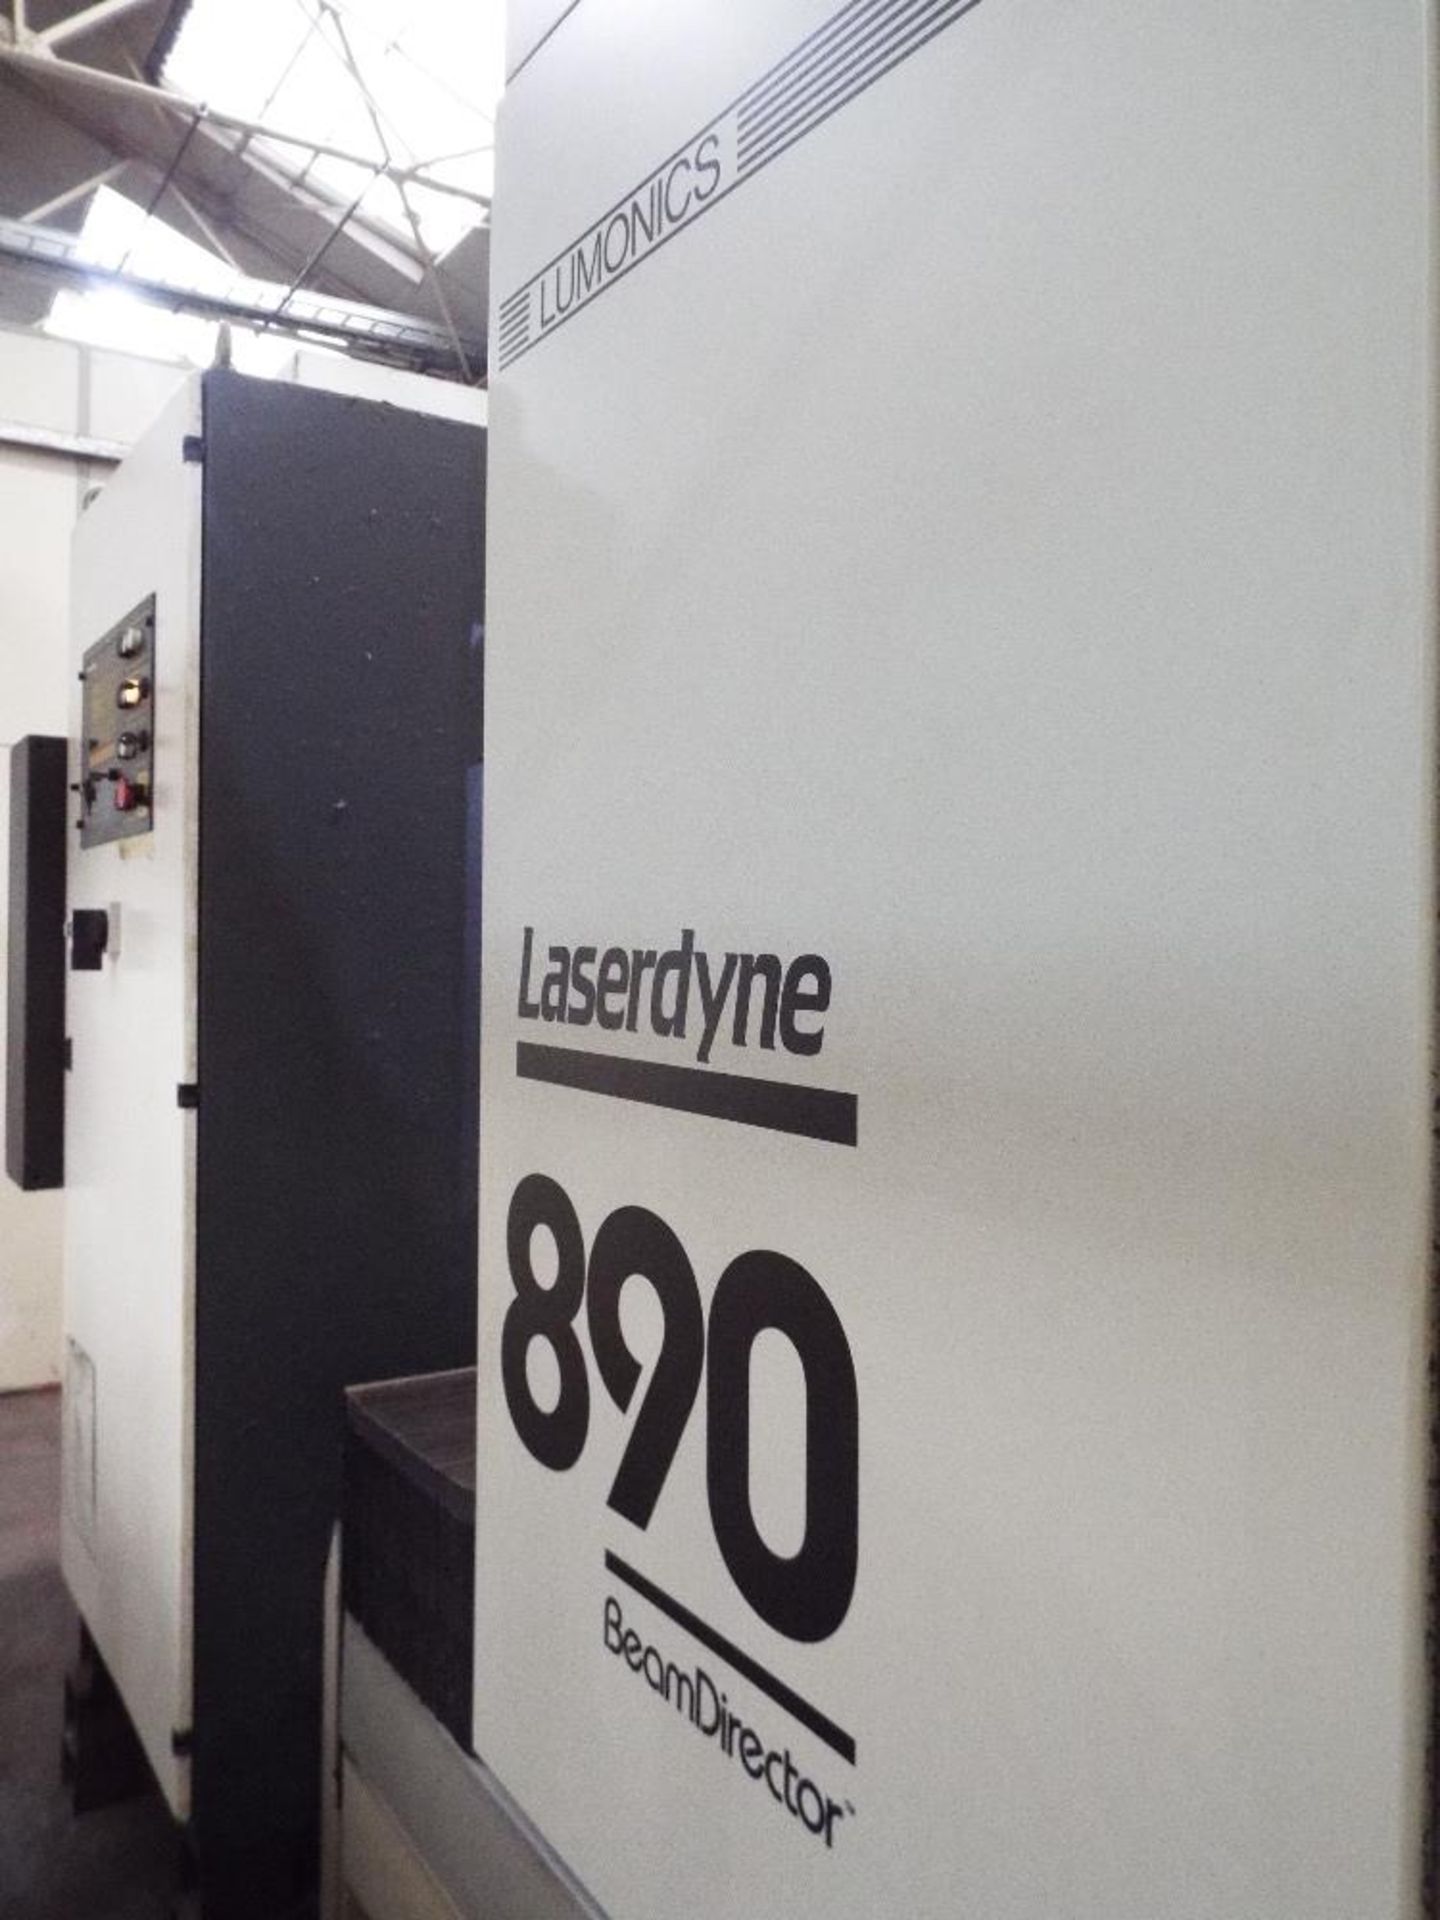 Lumonics Laserdyne 890 Beam Director Multiaxis Laser System cw Dust Extractor and Chilling Unit. - Bild 5 aus 36